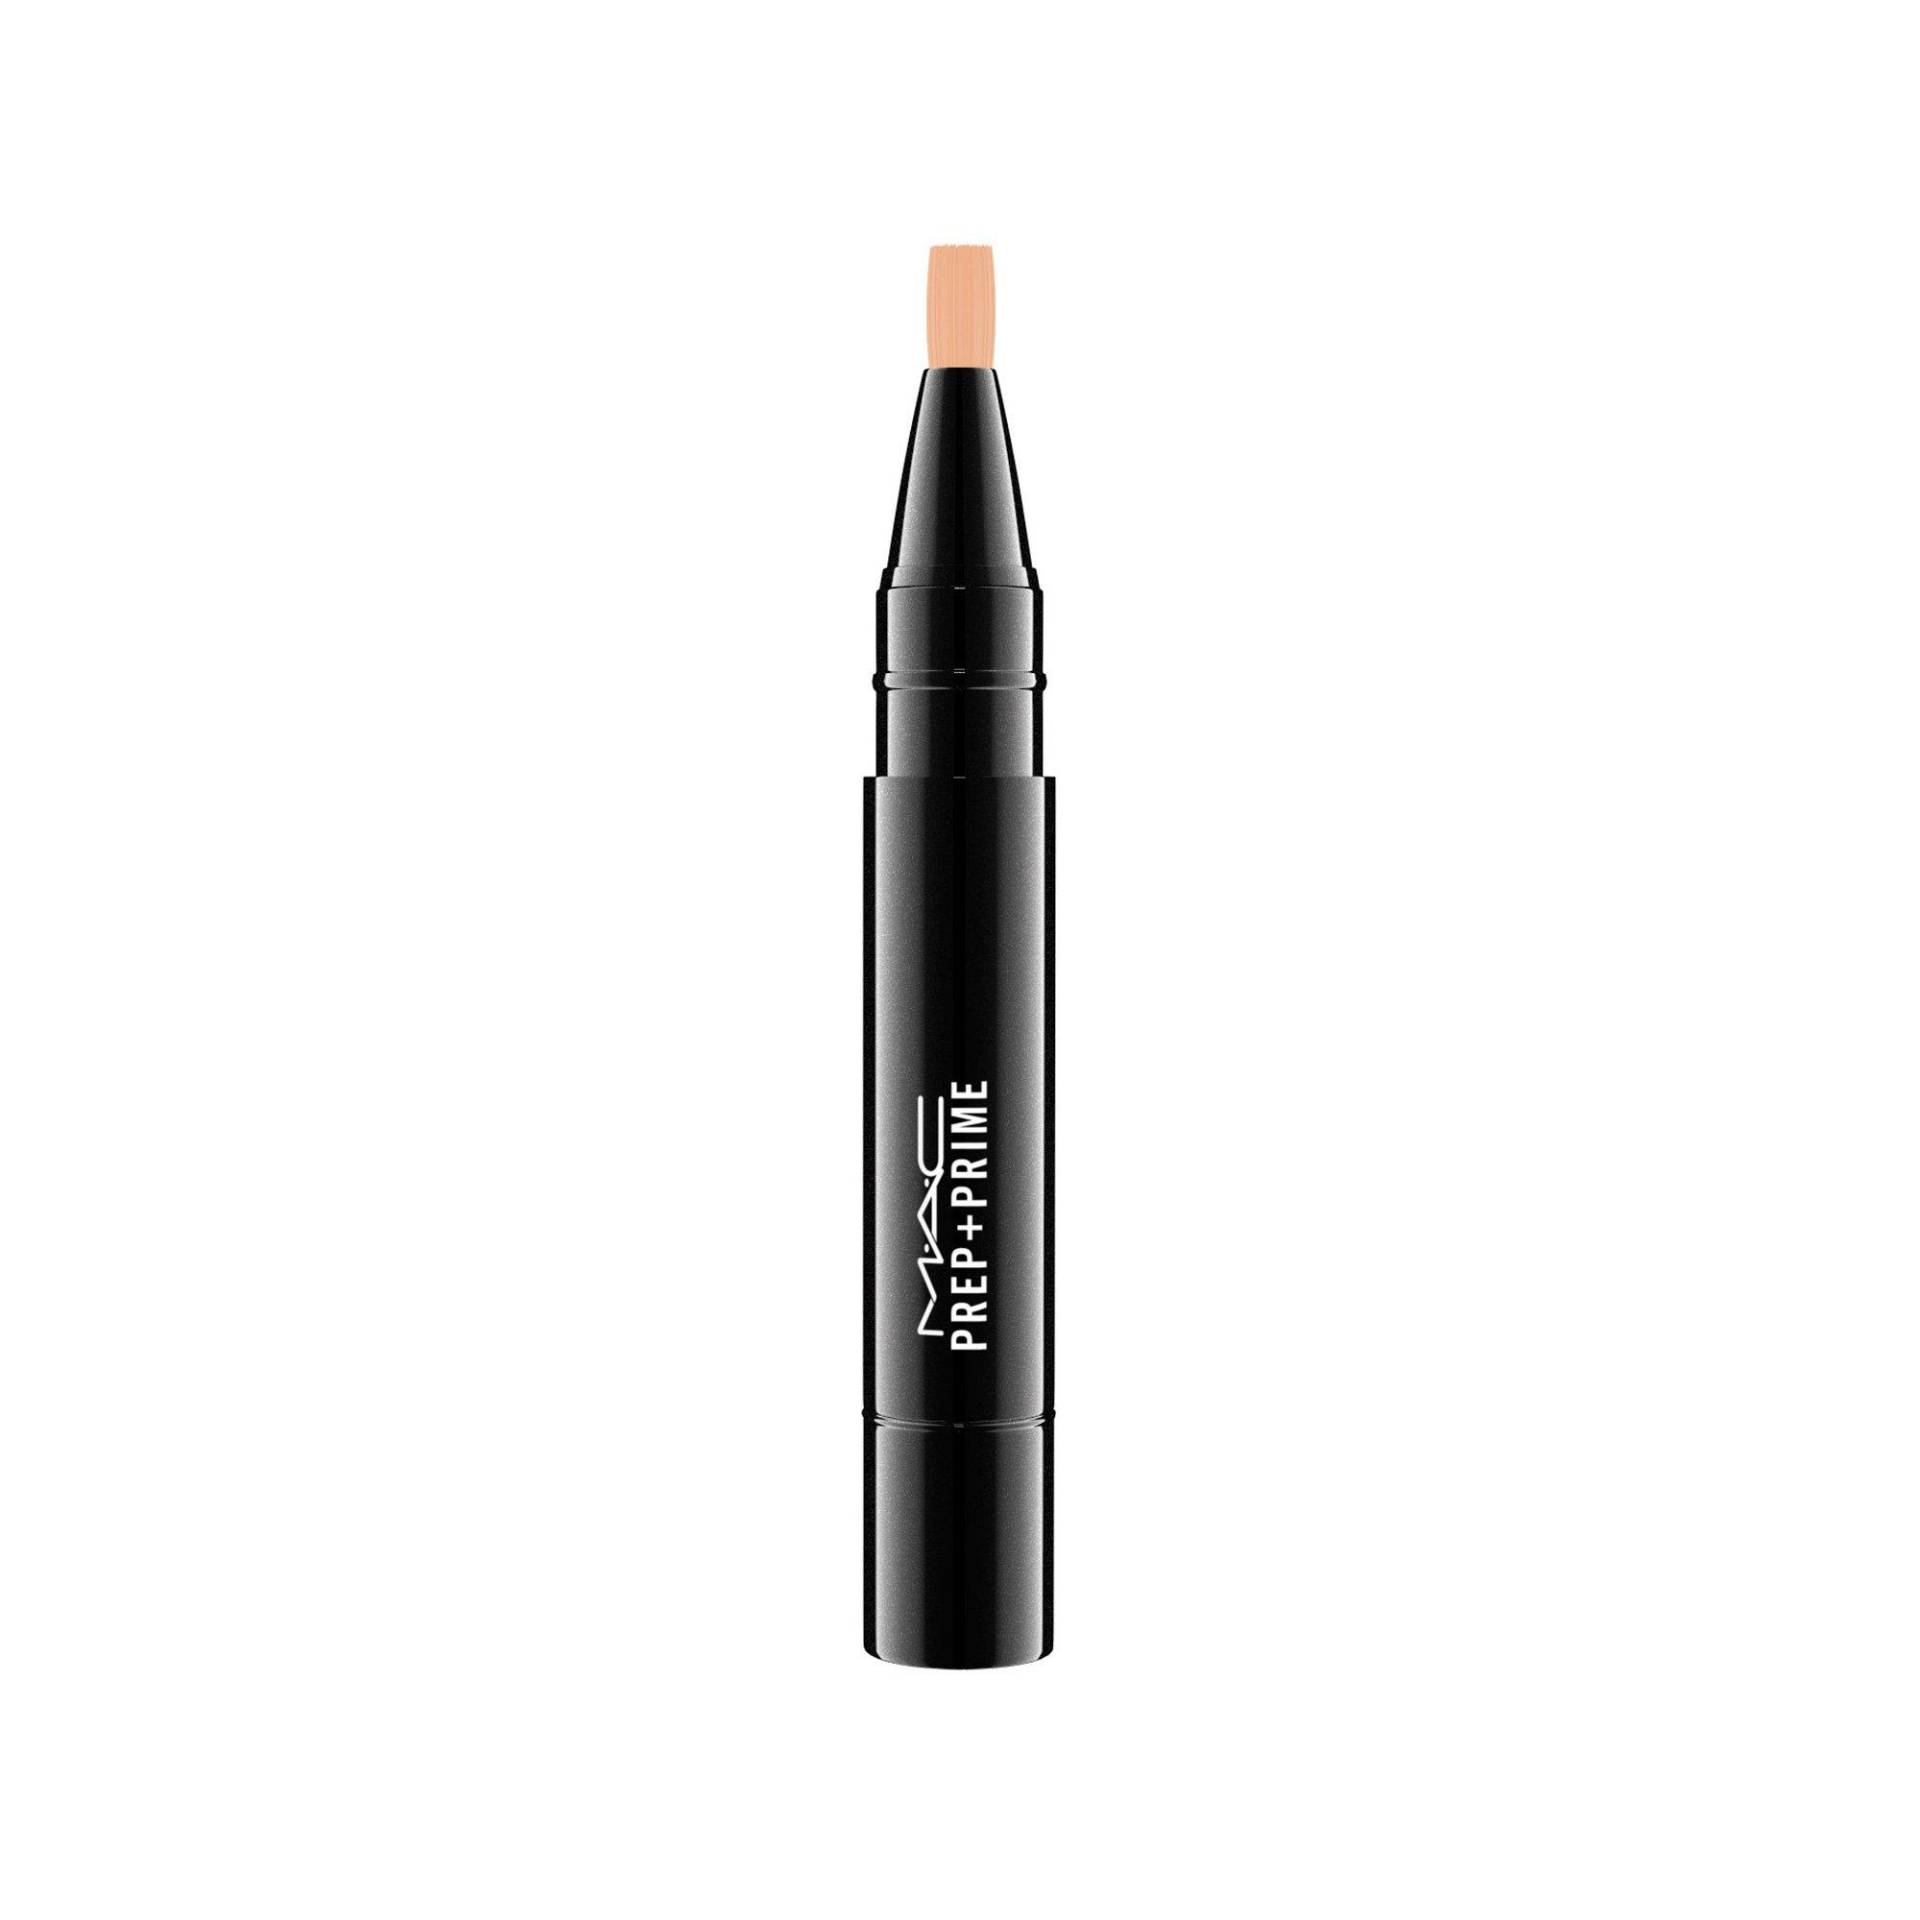 Prep+prime Pen-style Highlighter Damen Bright Forecast Highlighter 3.6ml von MAC Cosmetics